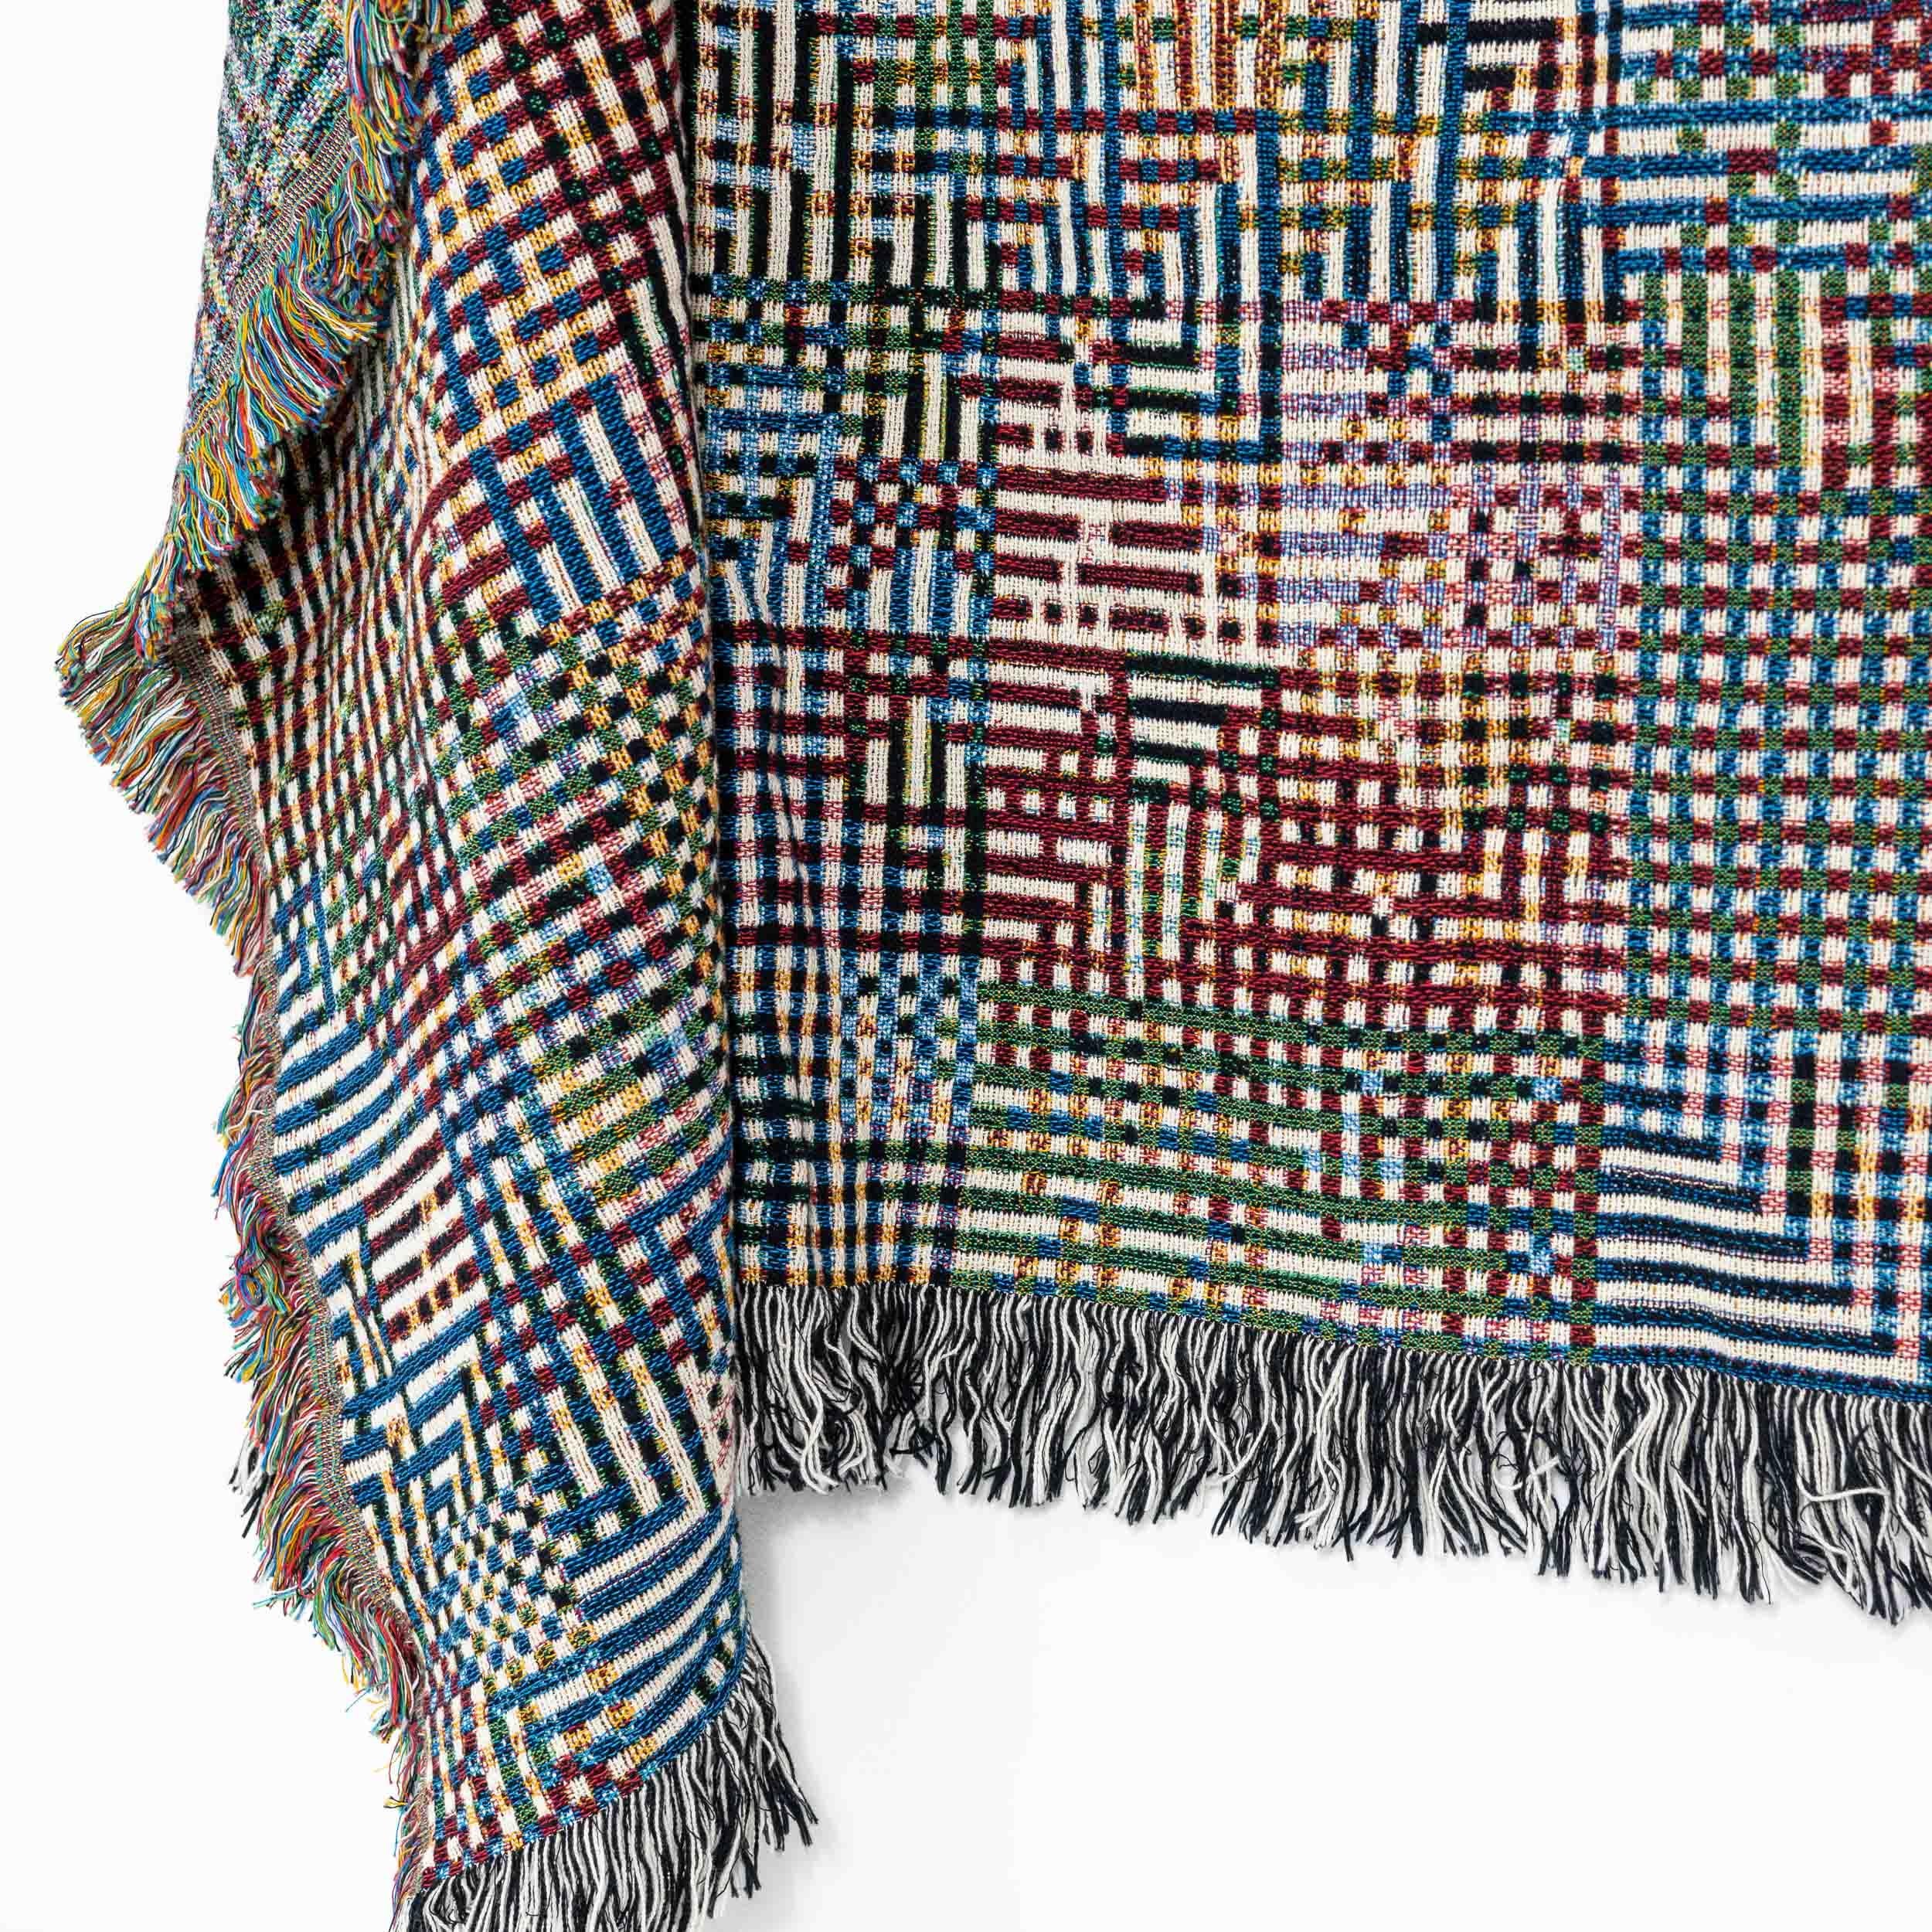 American Bit Map Throw Blanket 03, 100% Cotton Woven Contemporary Pixel Art, 60